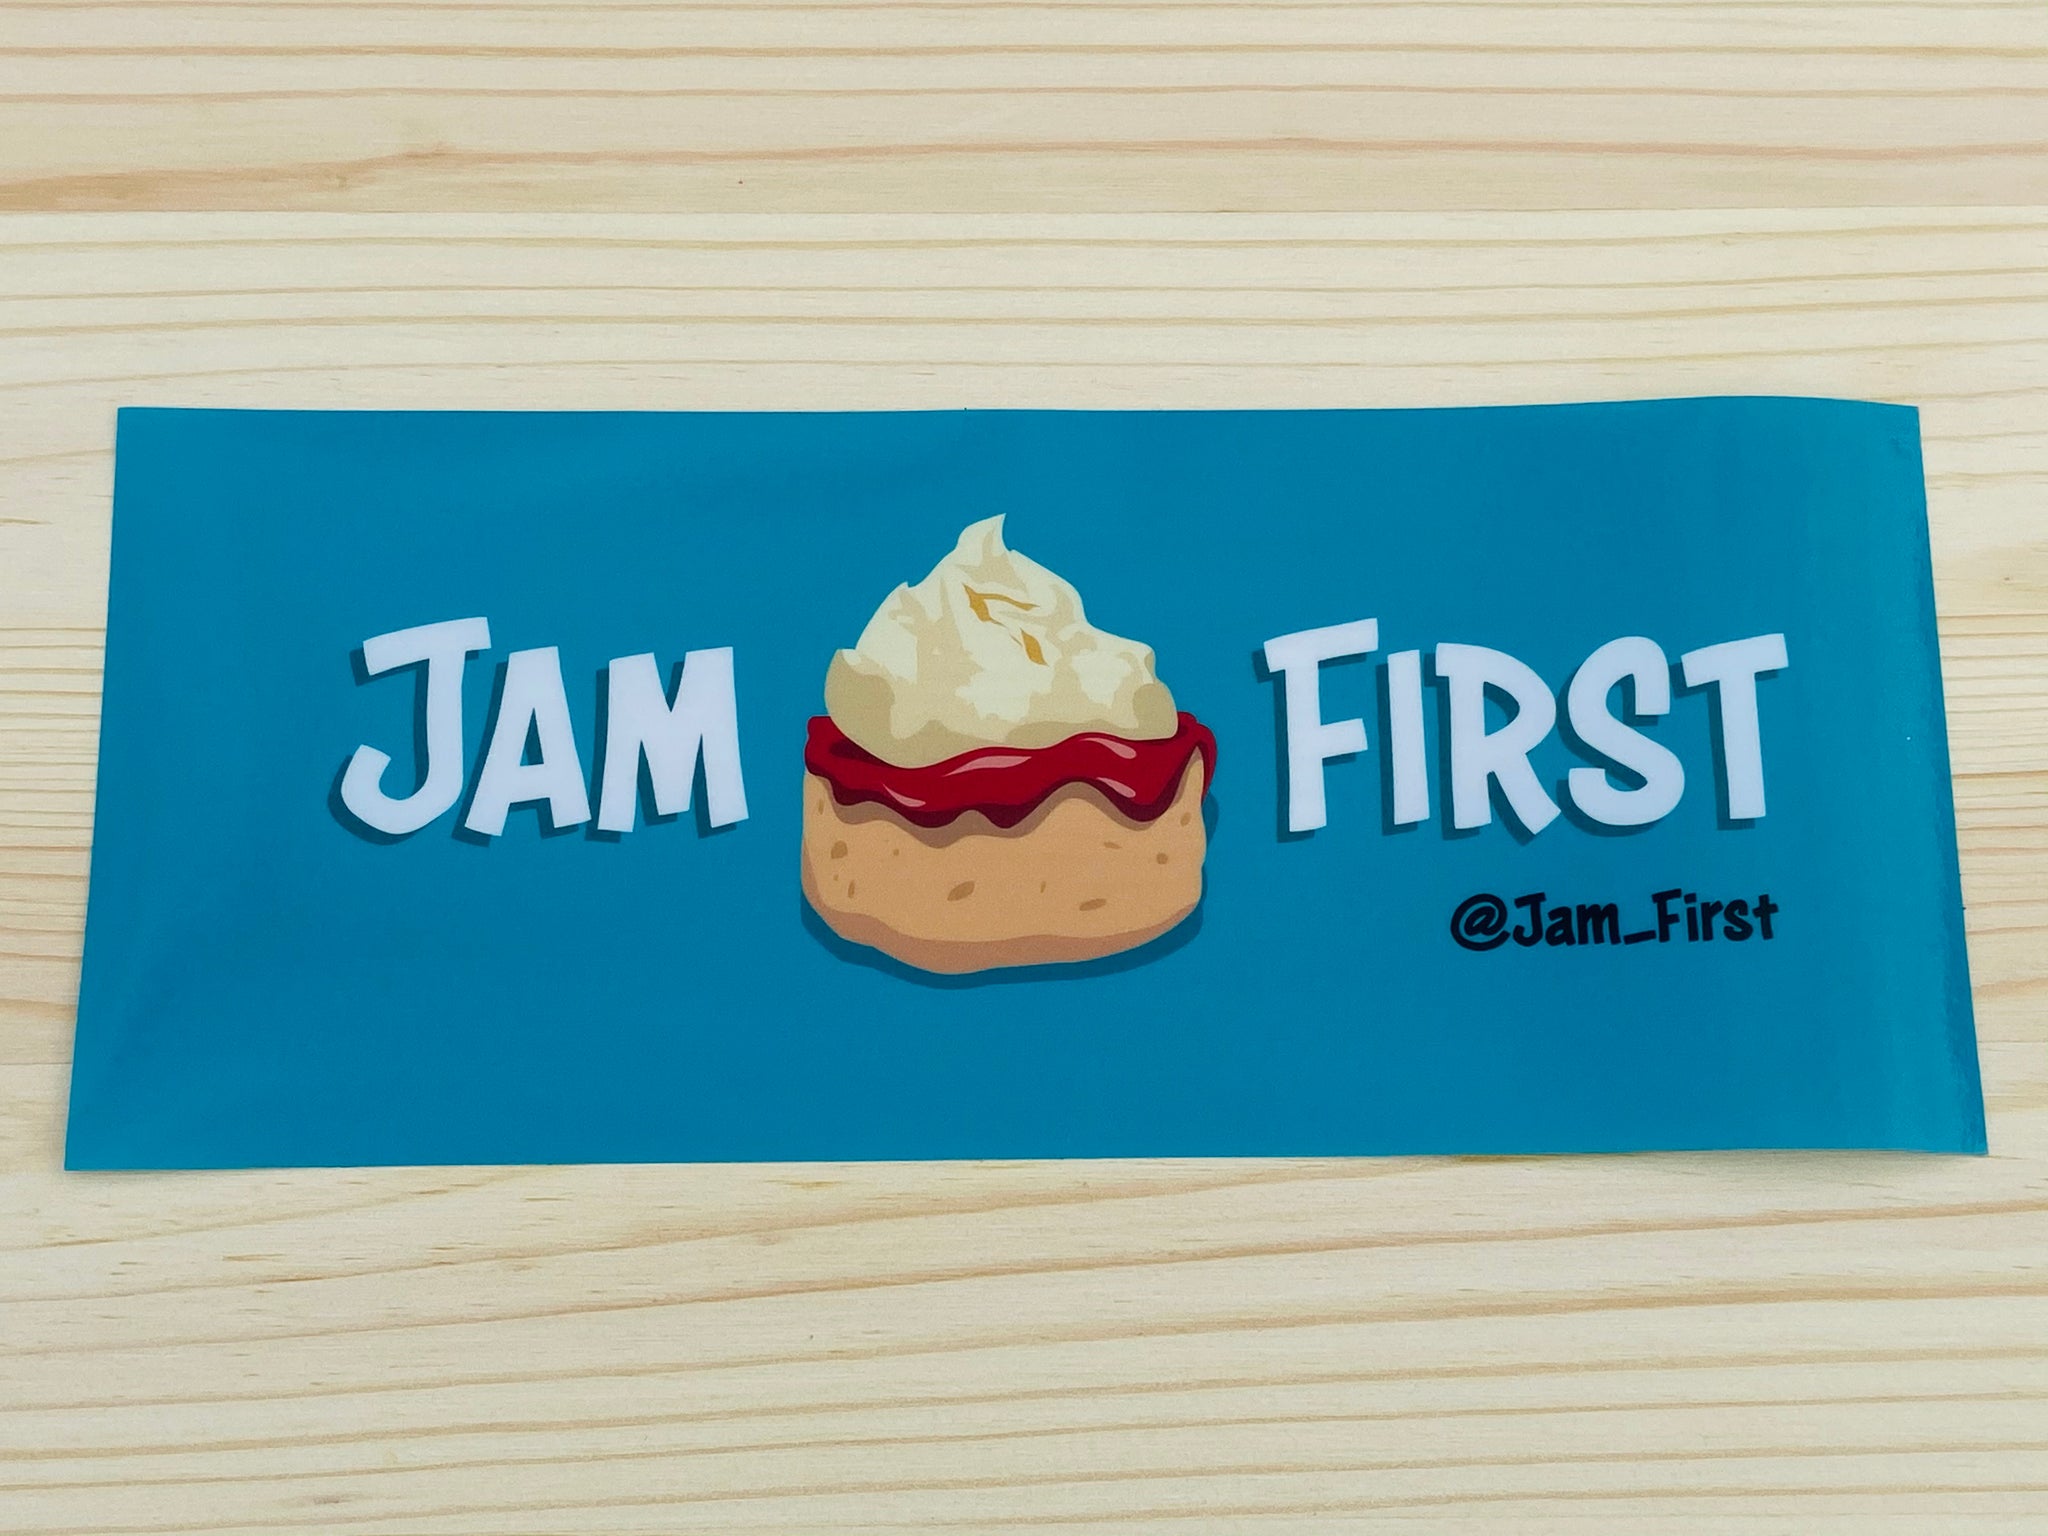 Jam First Banner Car Sticker (Window)